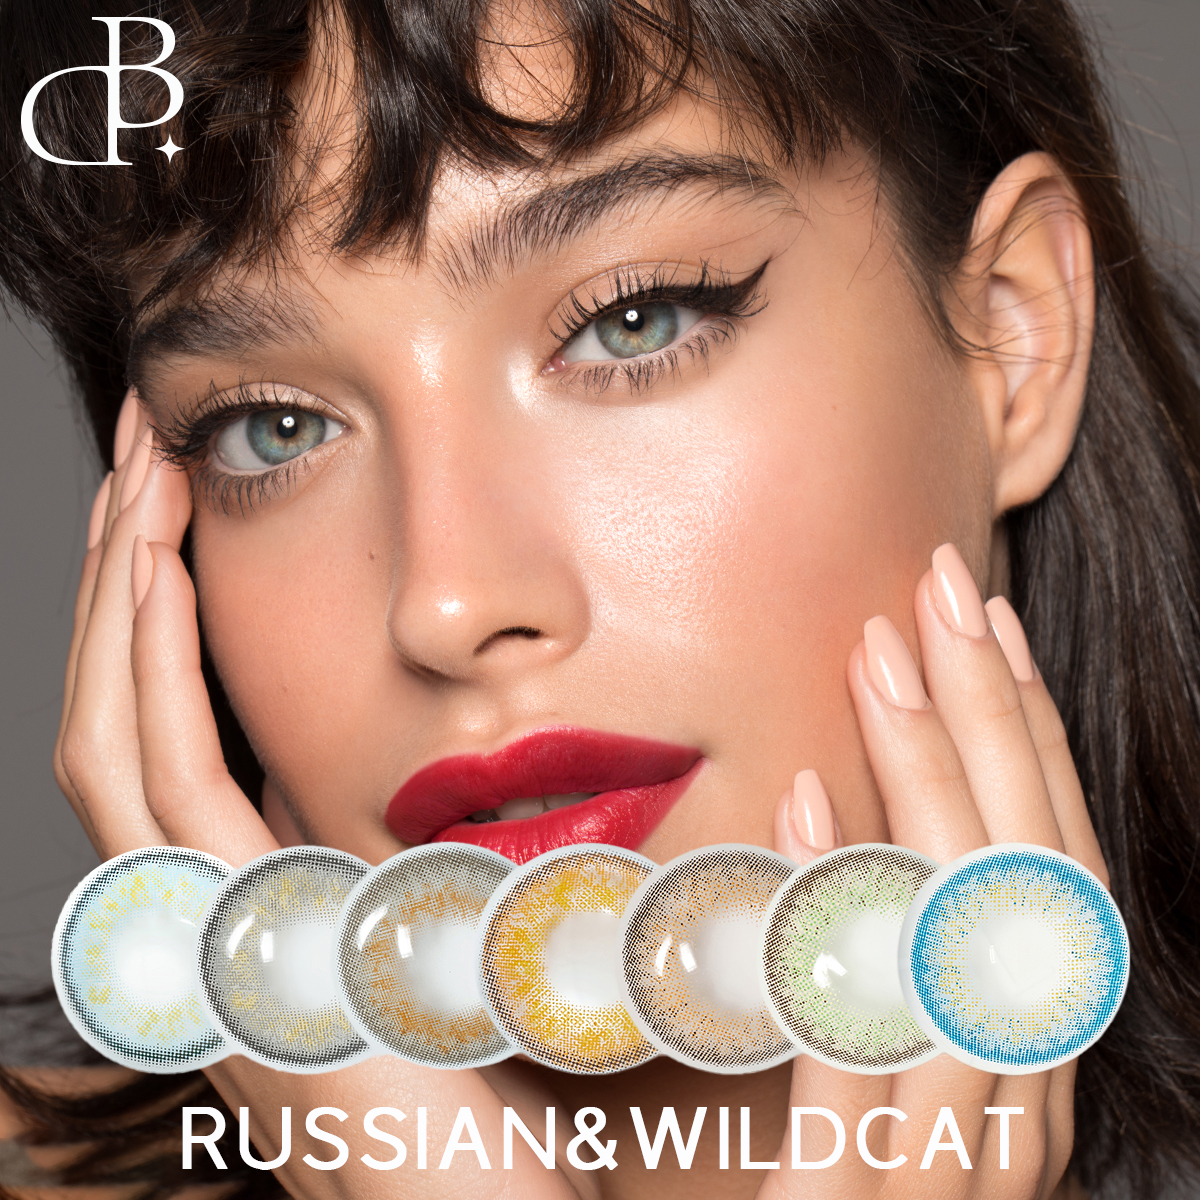 russian&wild-cat myk kontaktlinse farget 1 års Sclera øyelinse tilpassede kontaktlinser